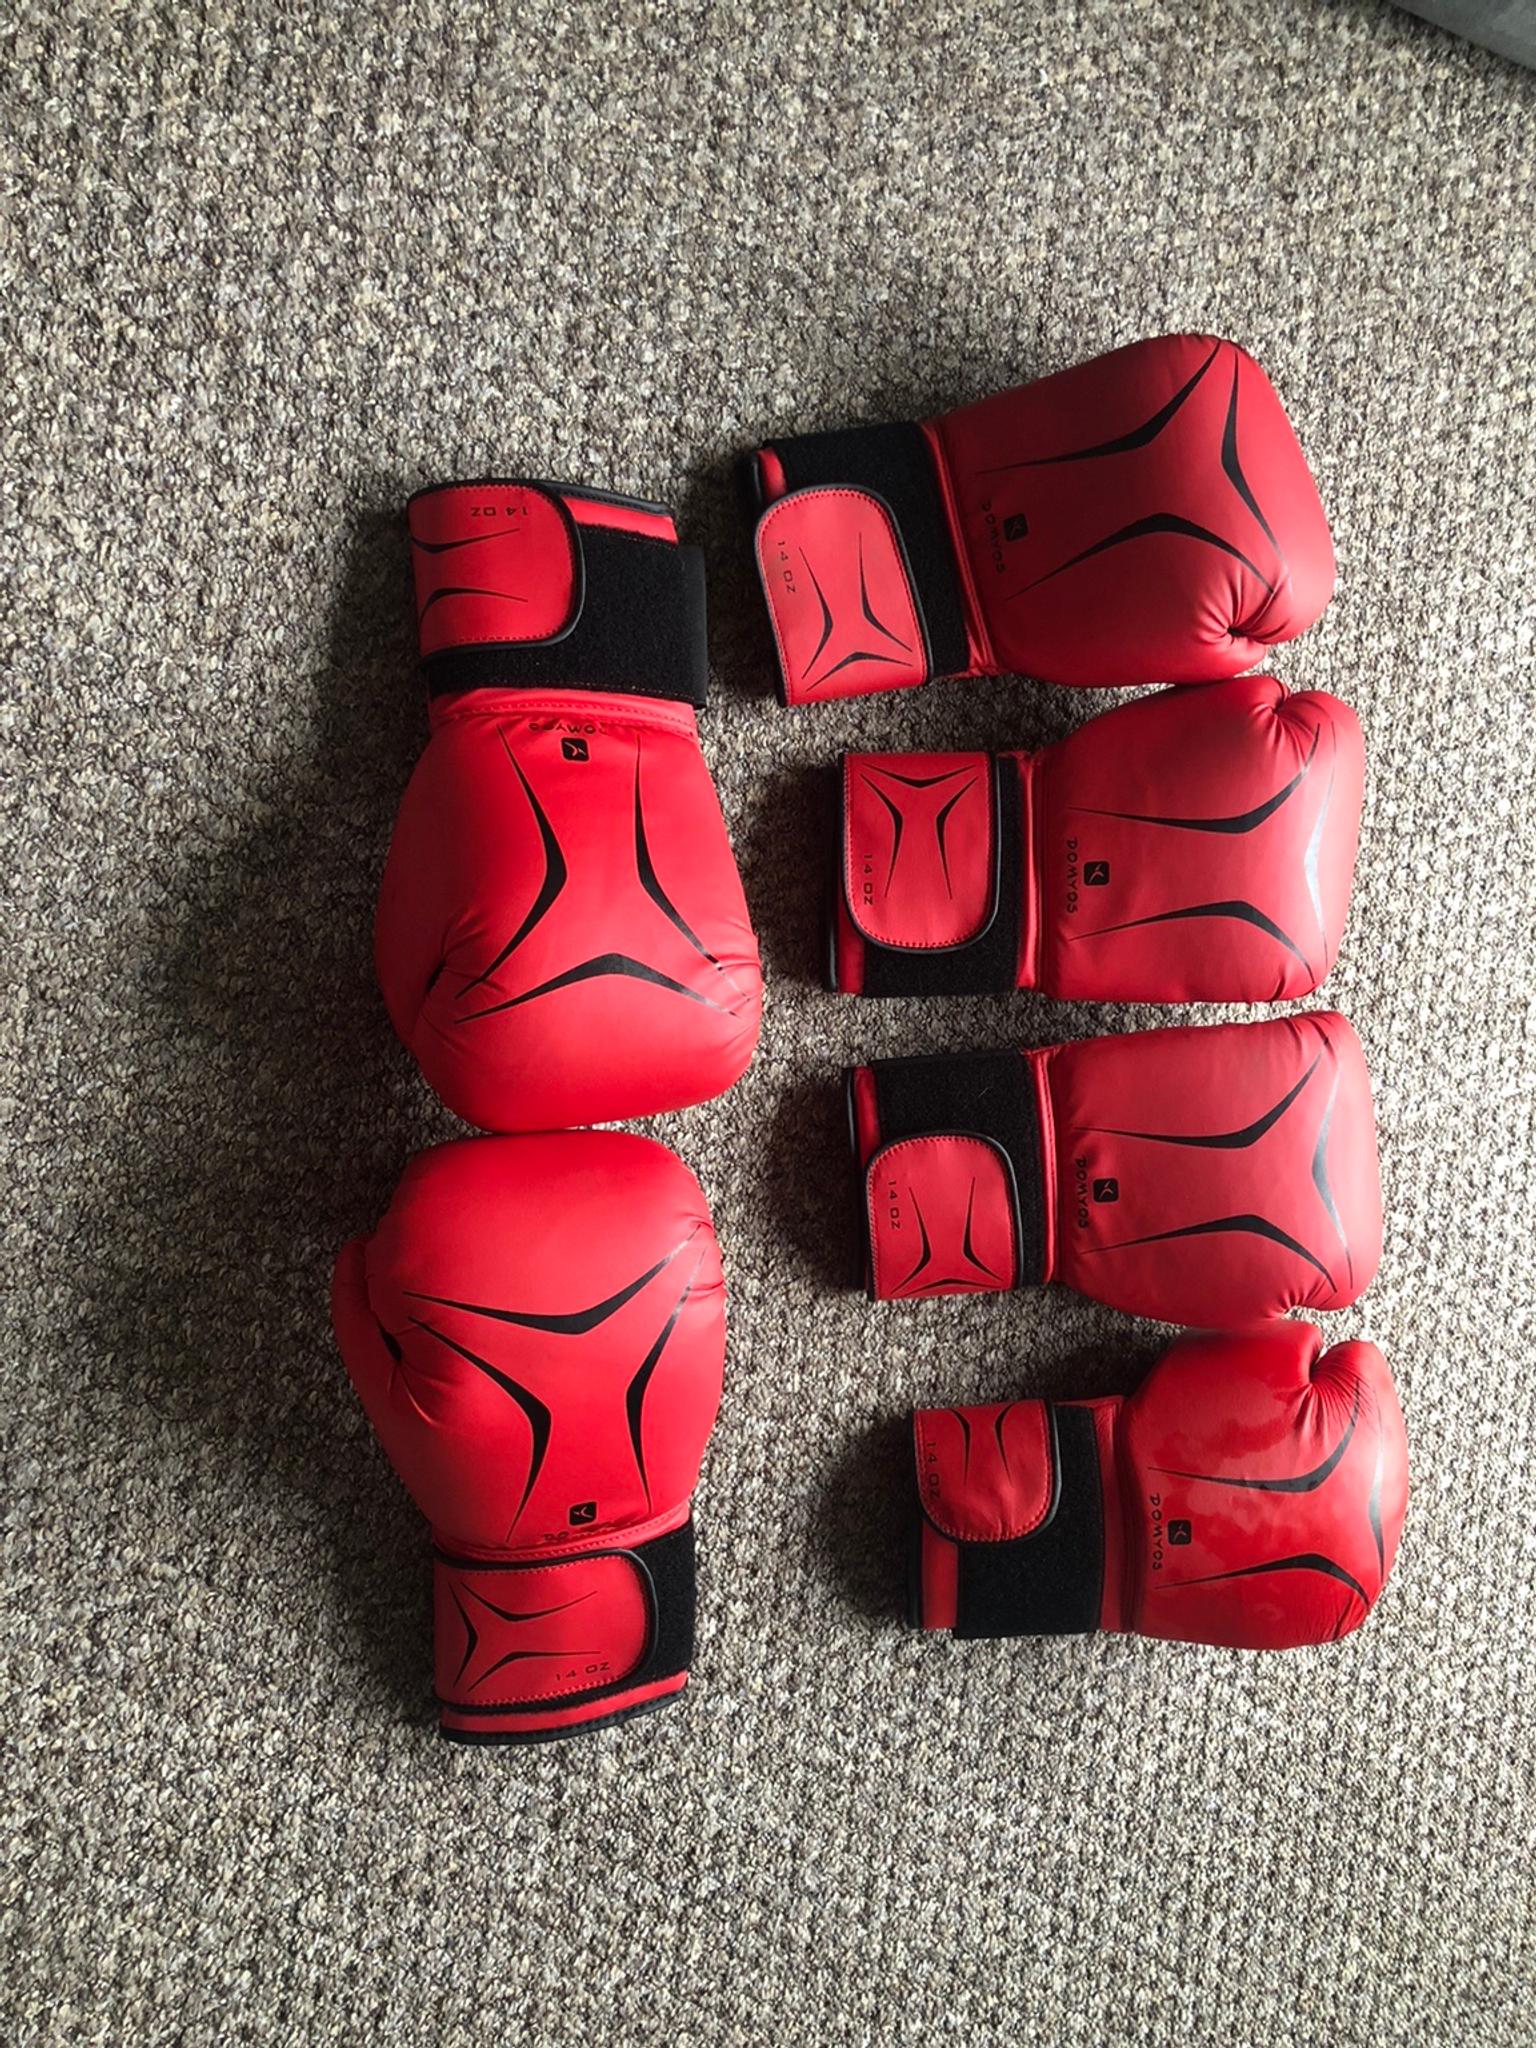 domyos boxing gloves